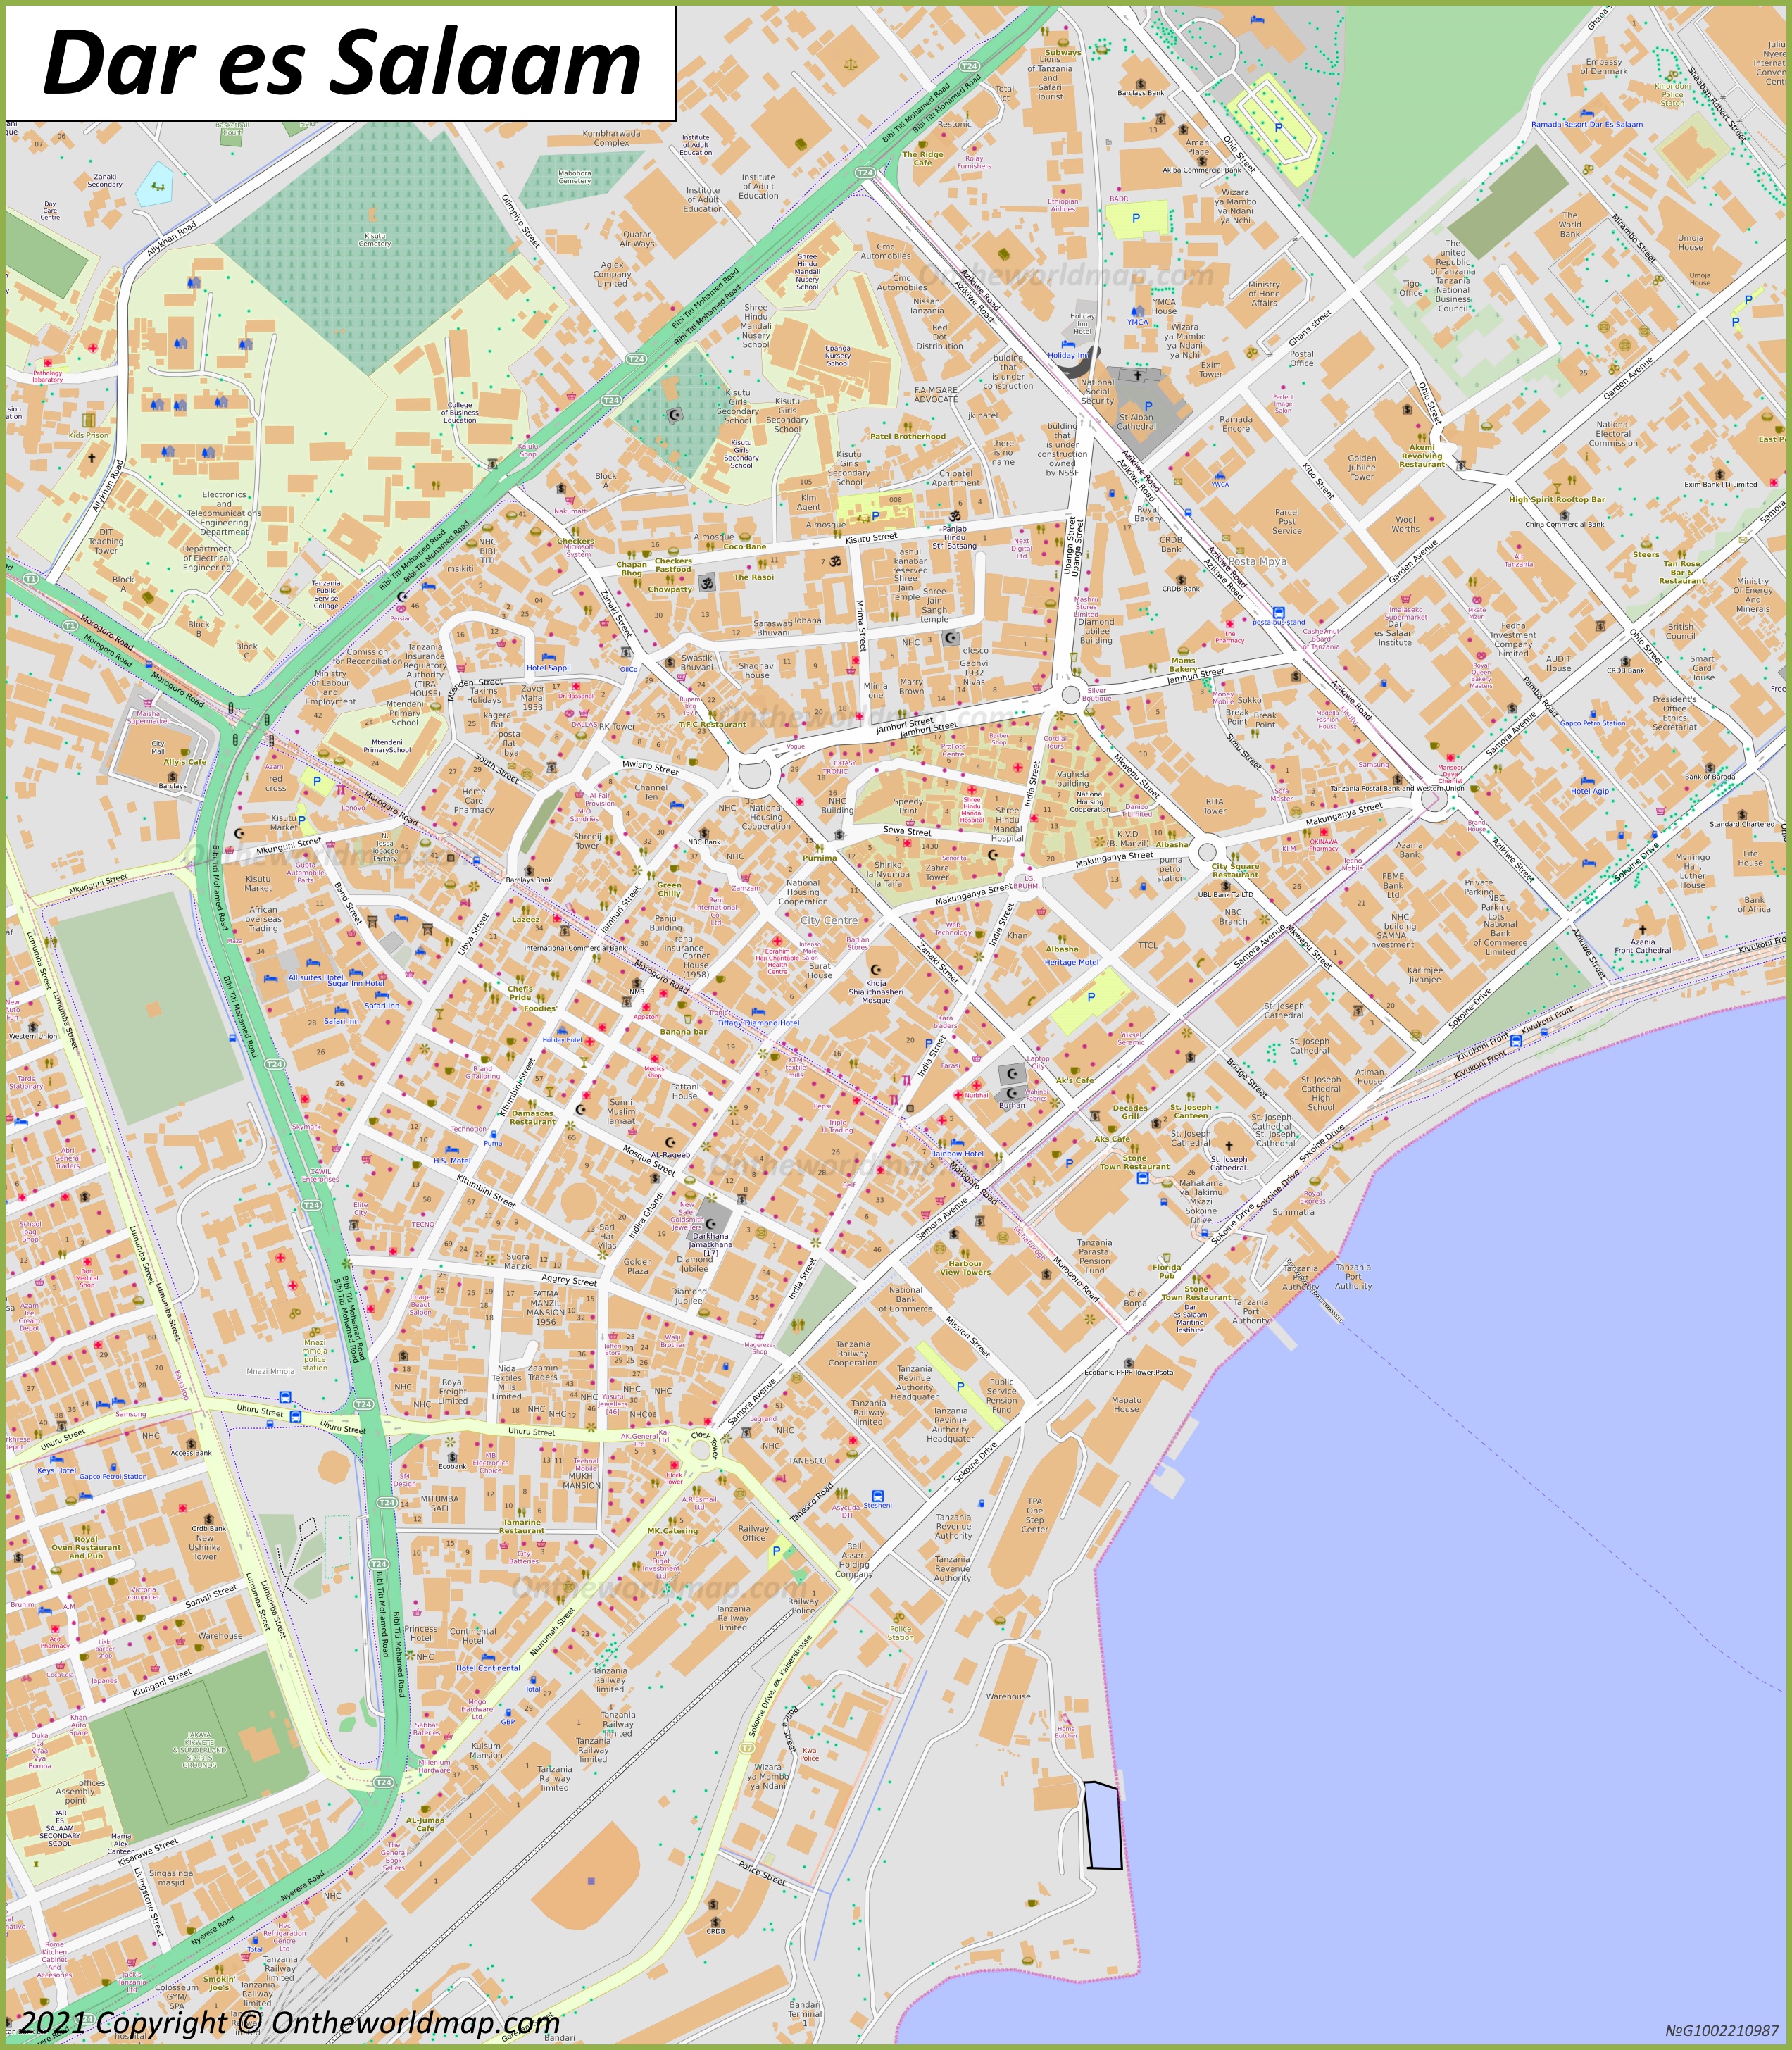 Dar es Salaam City Center Map